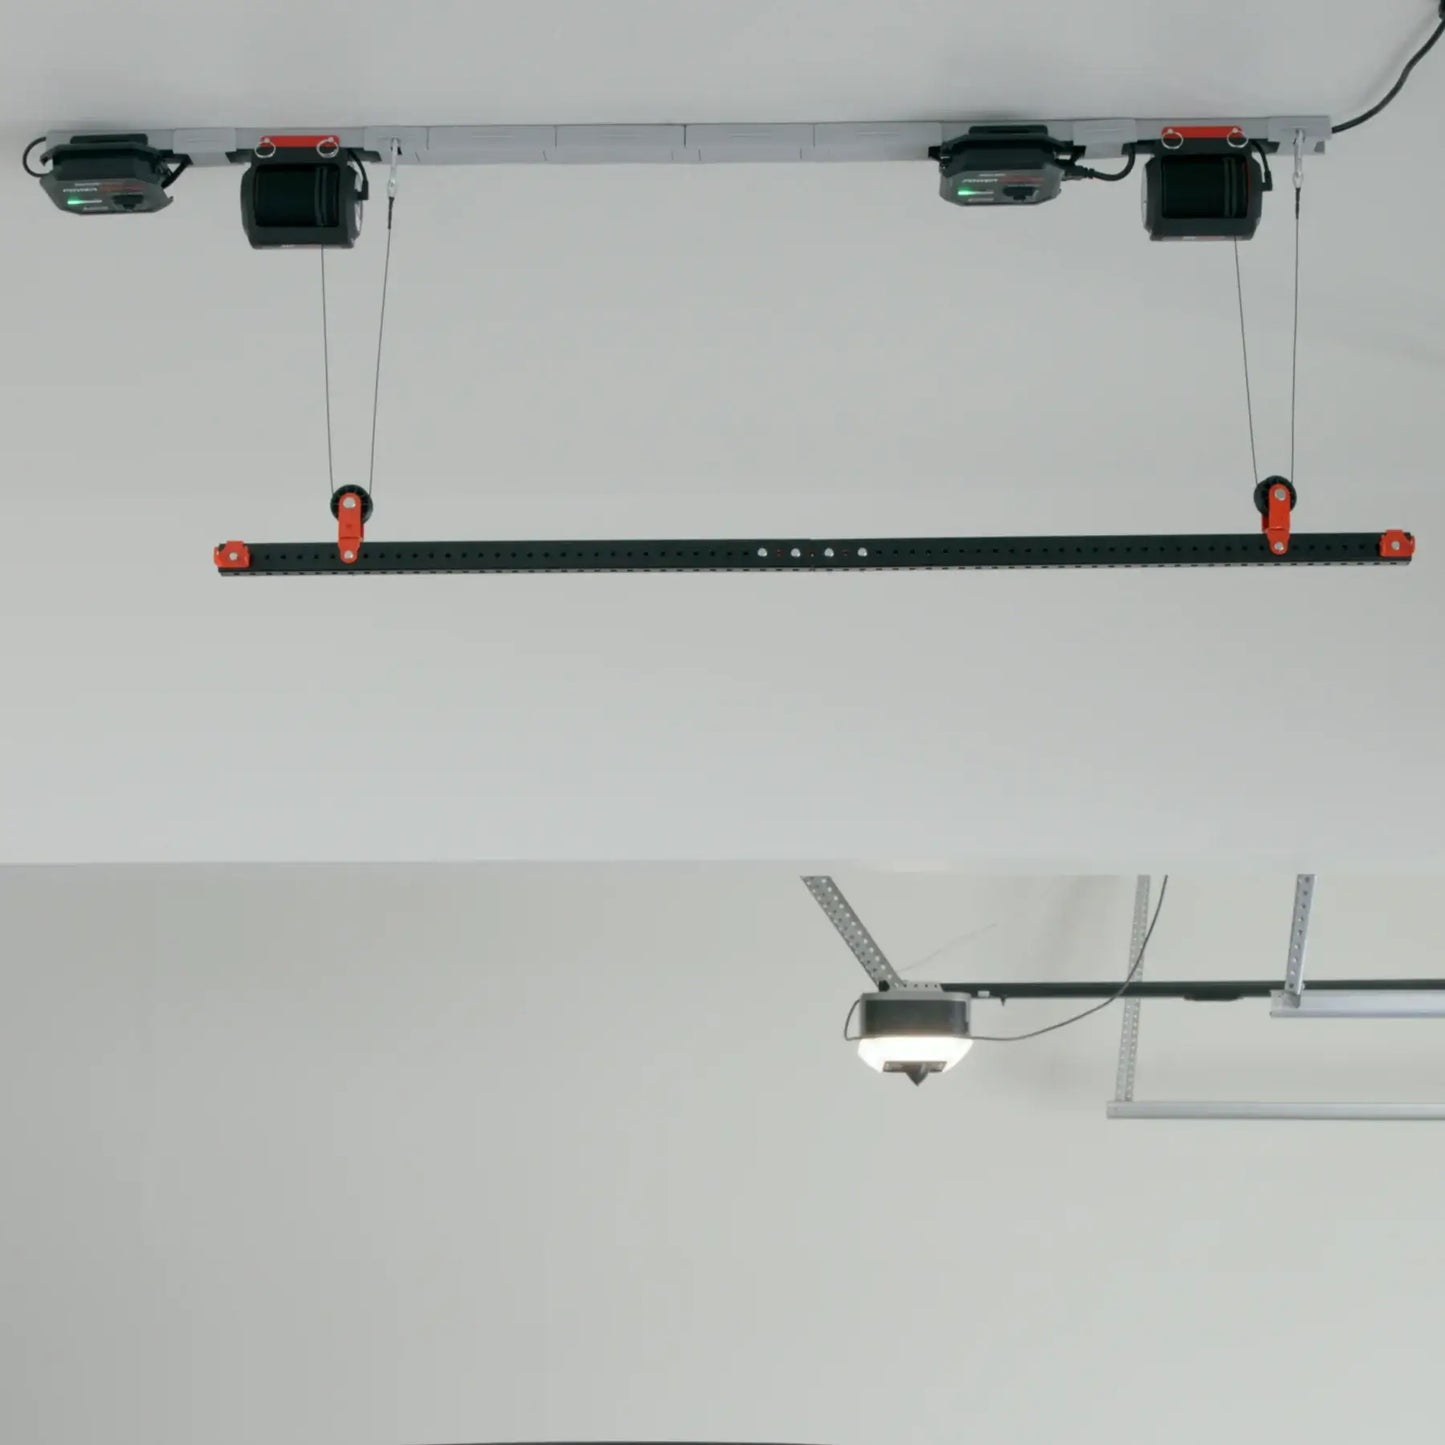 Universal Bar Frame & Strap Electric Garage Storage Lift by GarageSmart & SmarterHome (200lb Load Capacity, 2 Sizes)